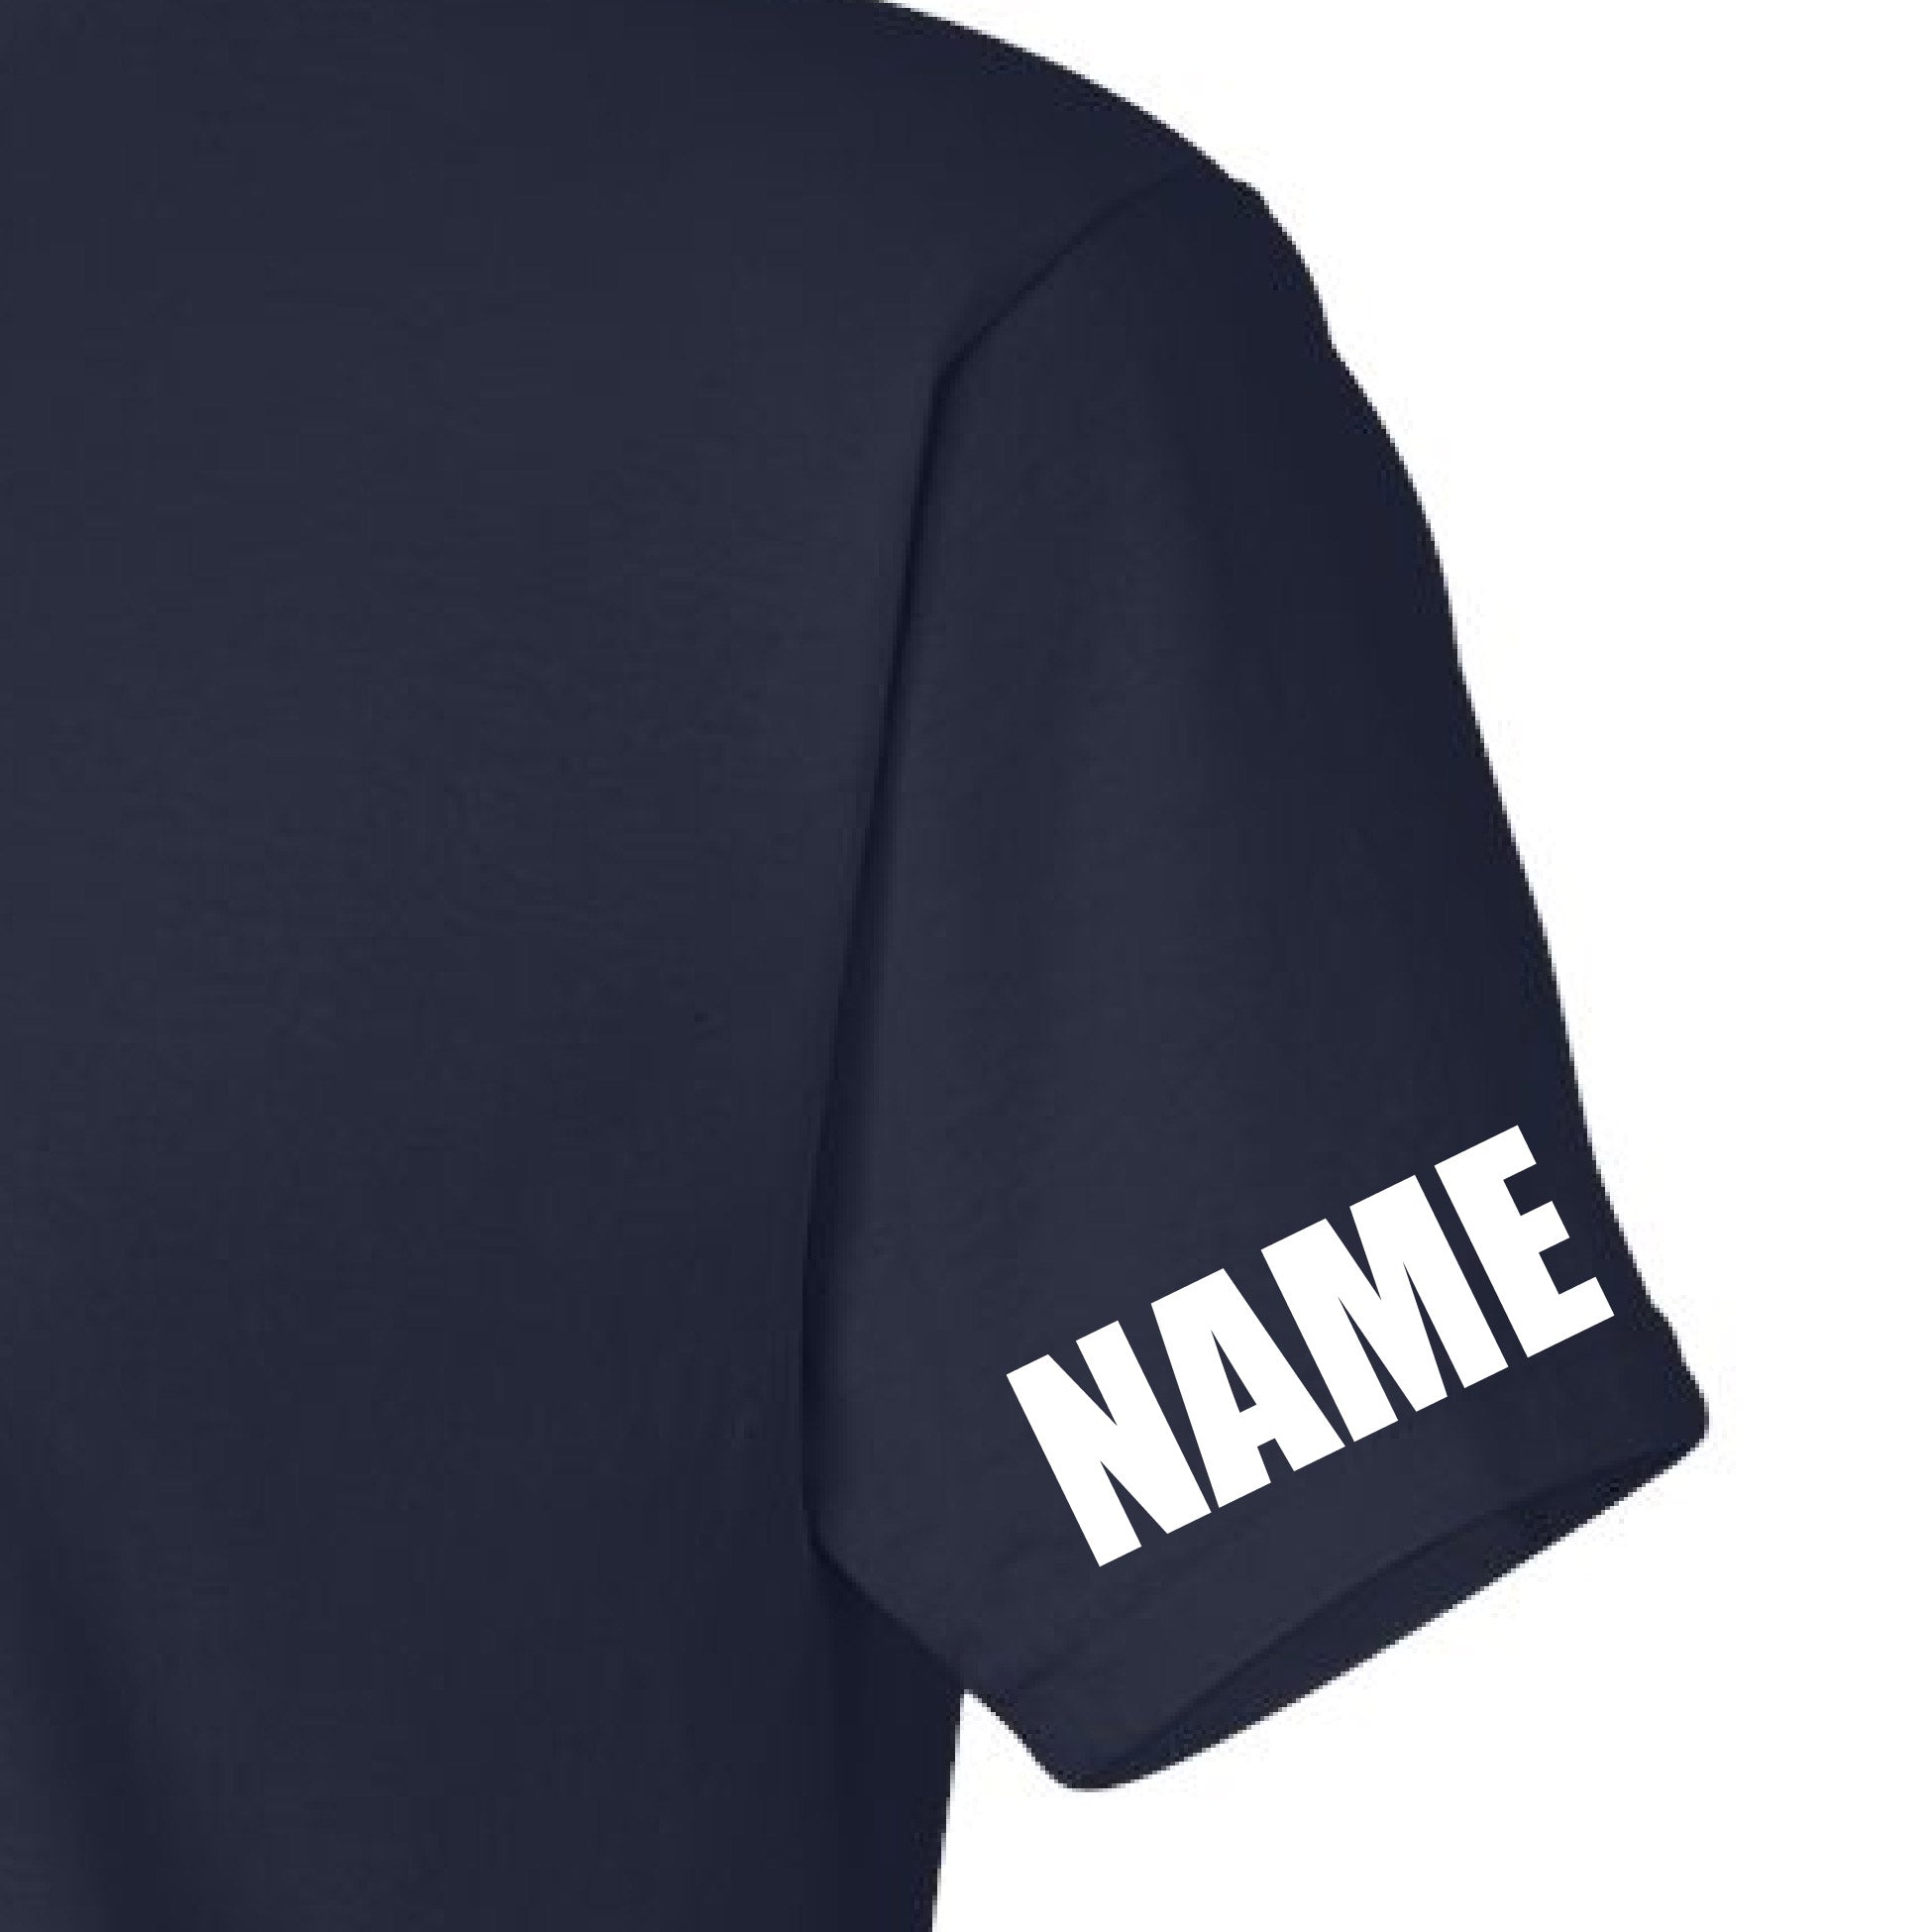 Heart Song T-Shirt Name Option